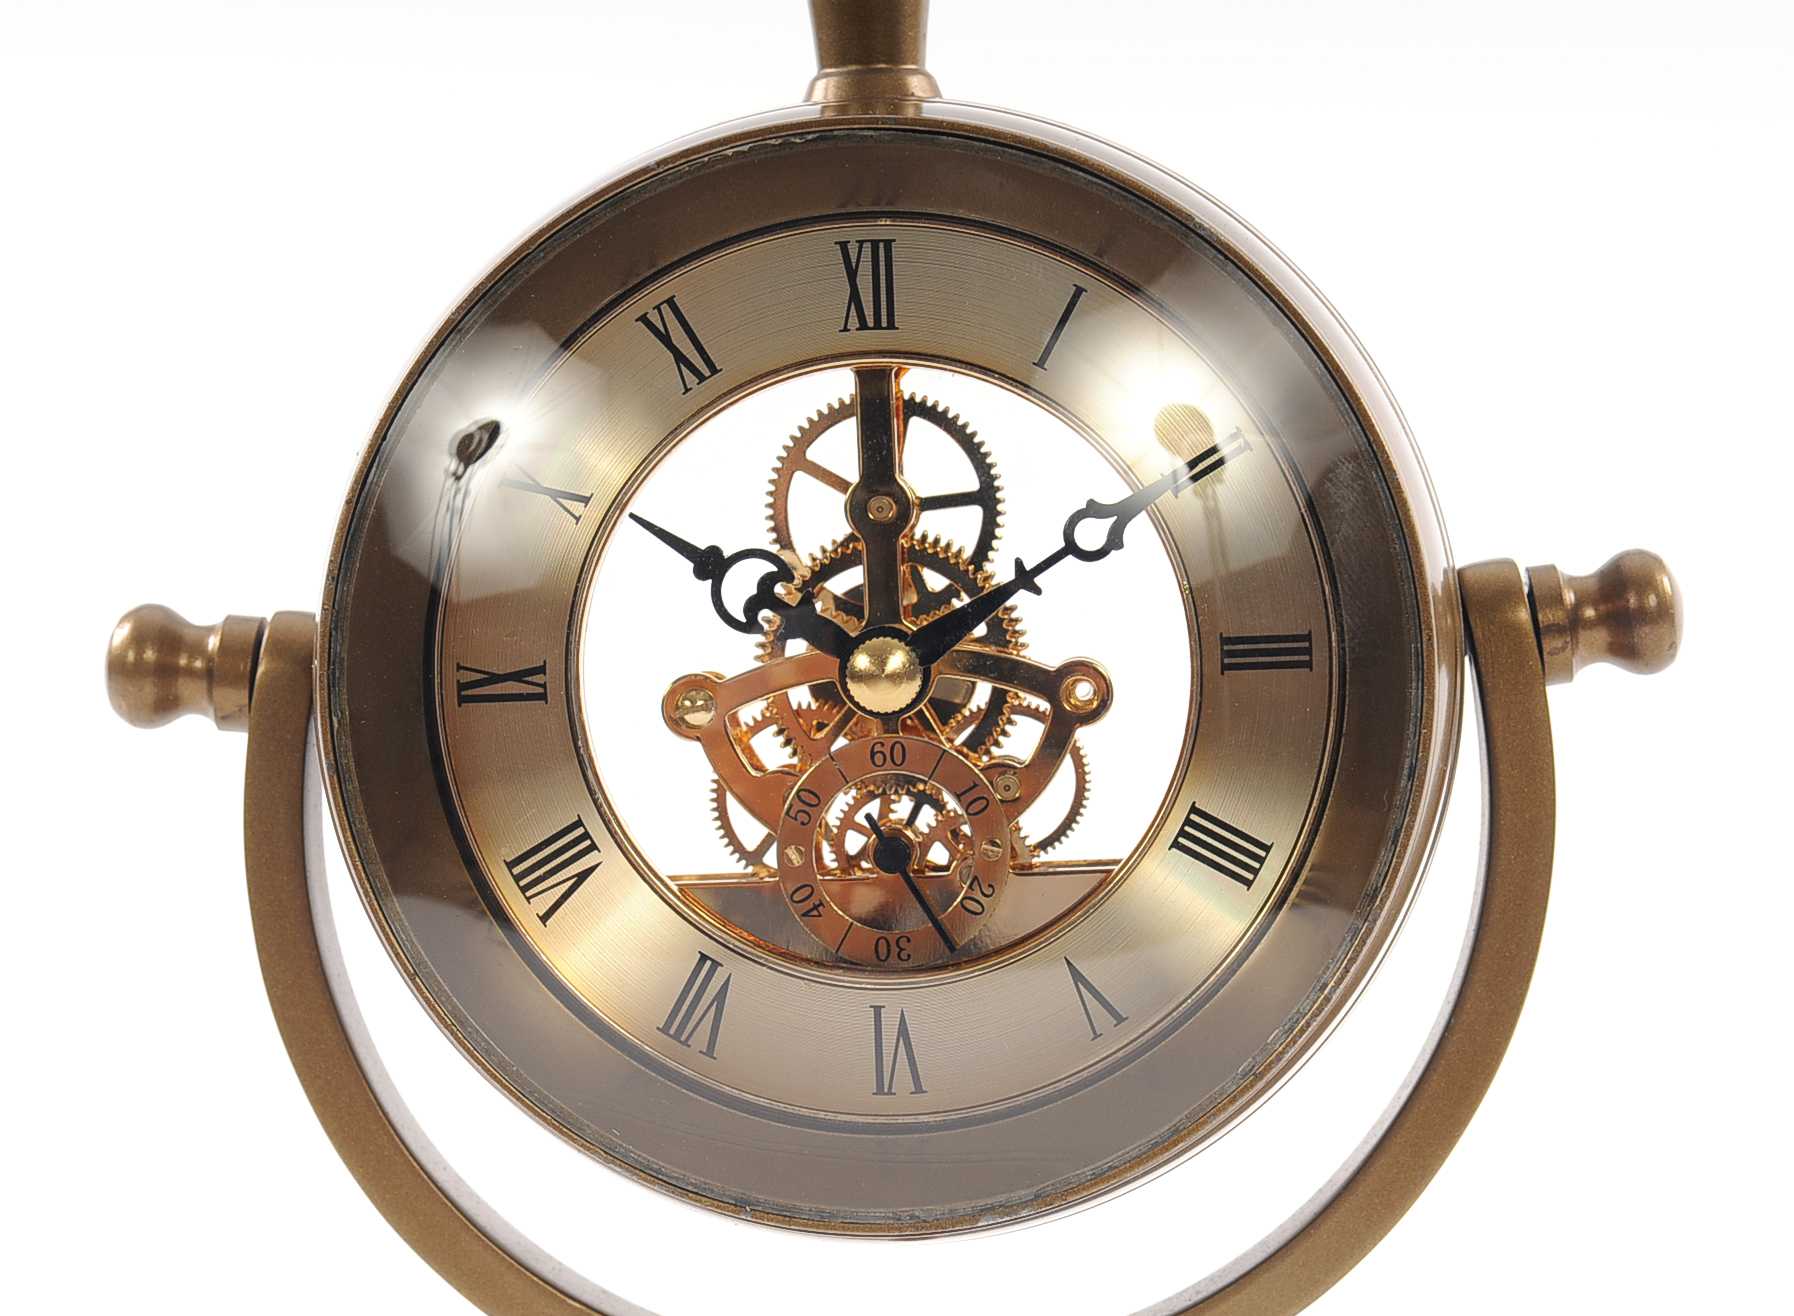 8" Circle Brass Metal And Glass Analog Wall Clock